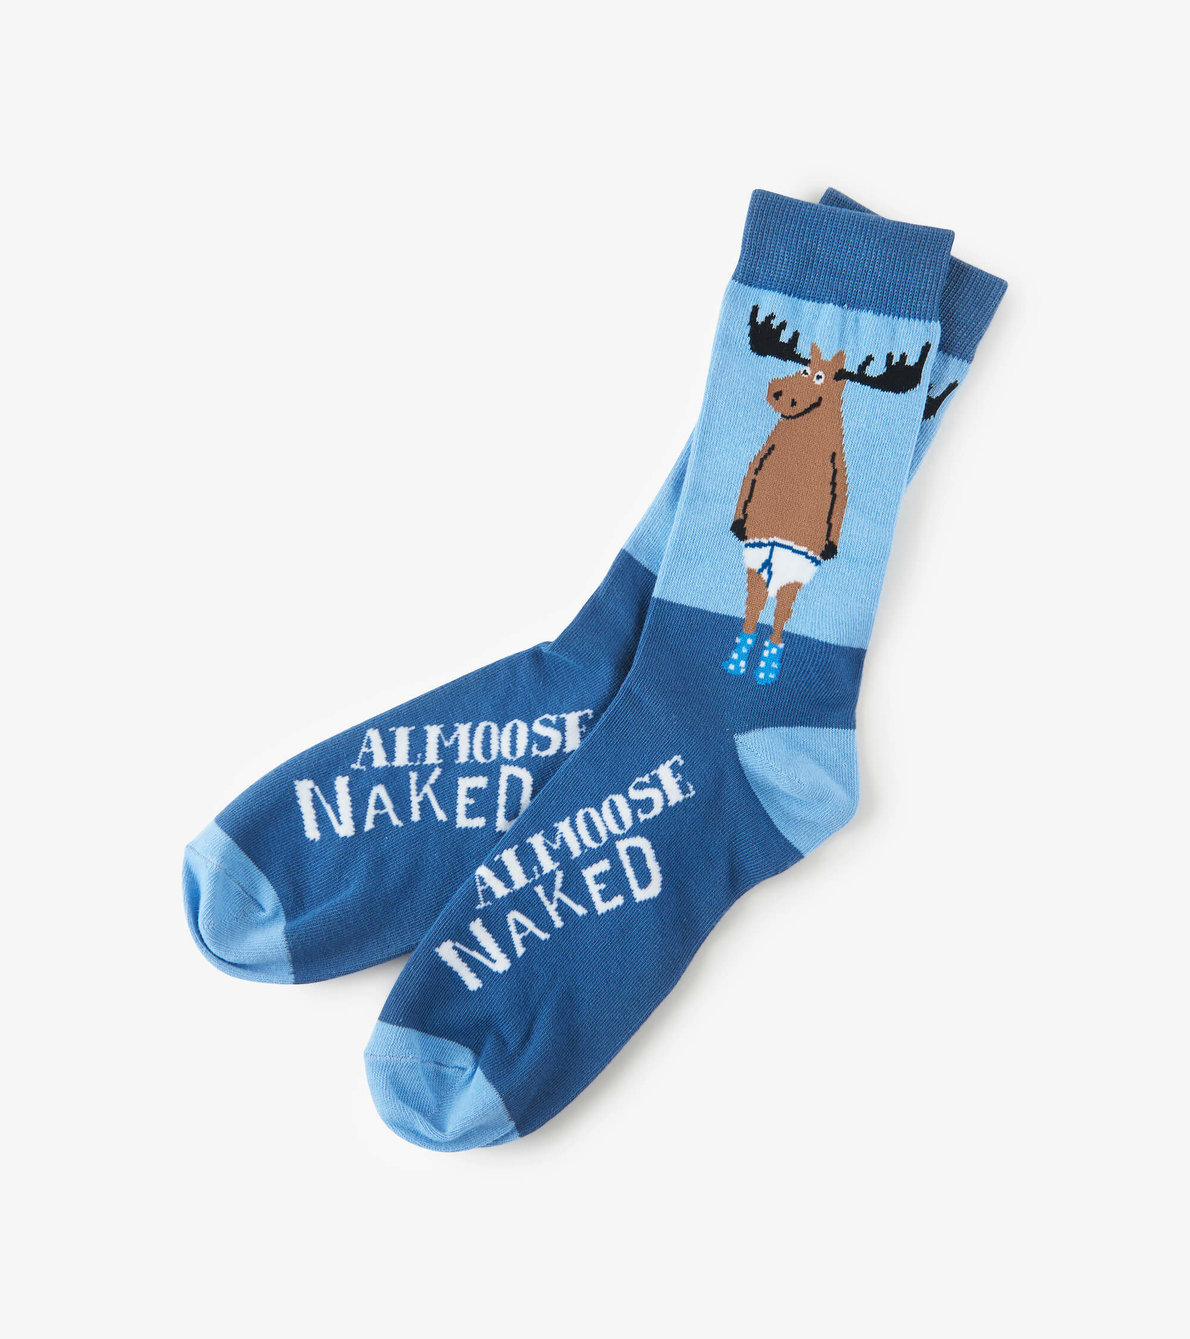 View larger image of Almoose Naked Men's Crew Socks